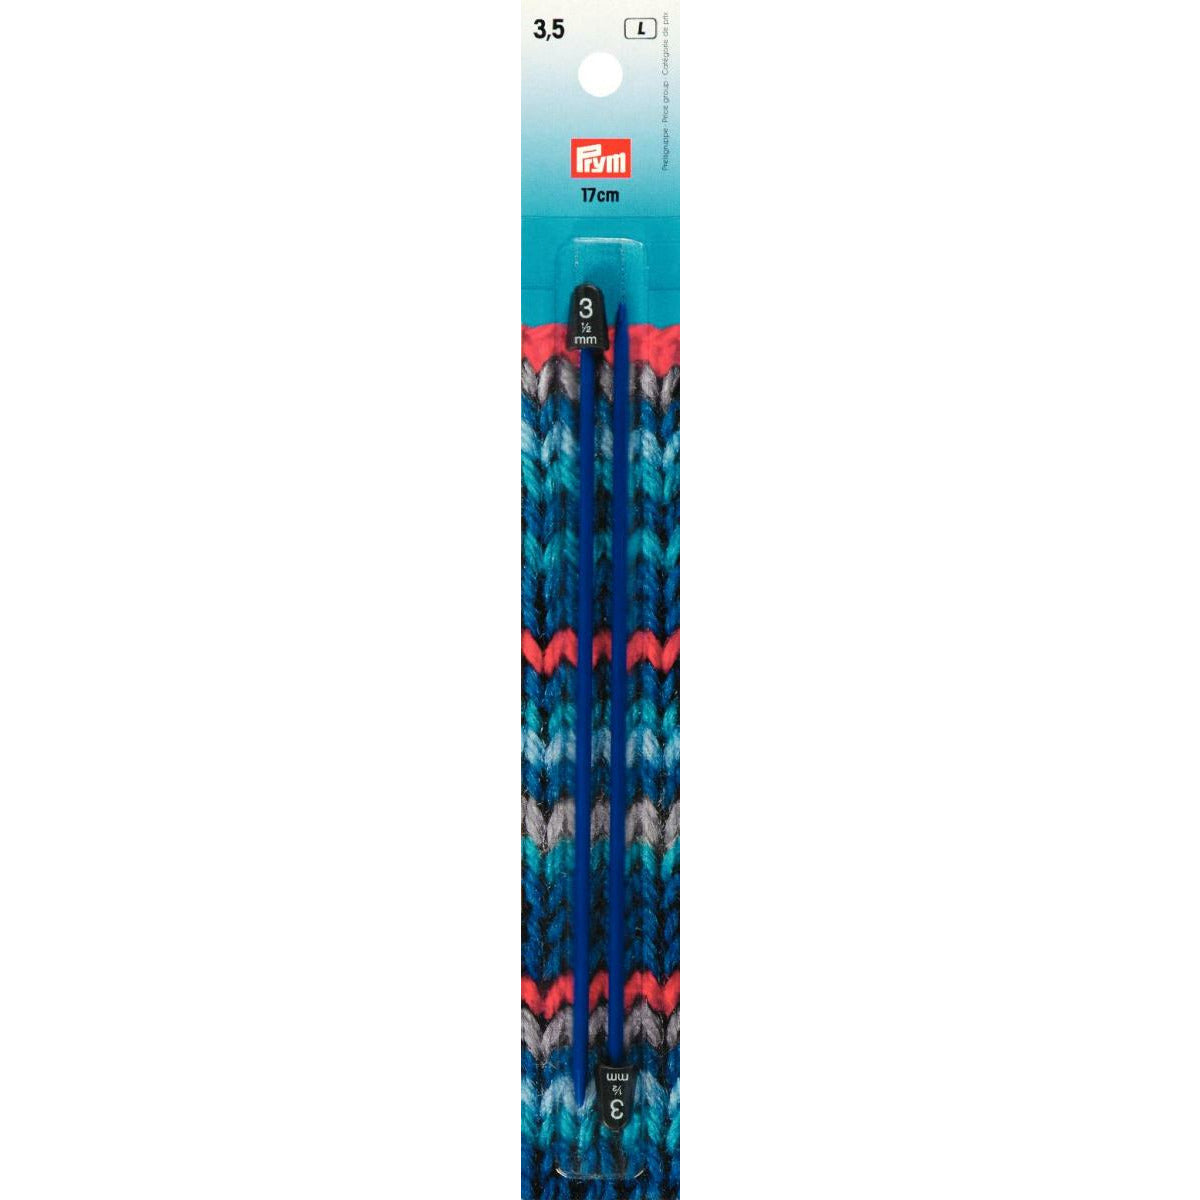 Kinderstricknadeln 3,50 mm blau 17 cm